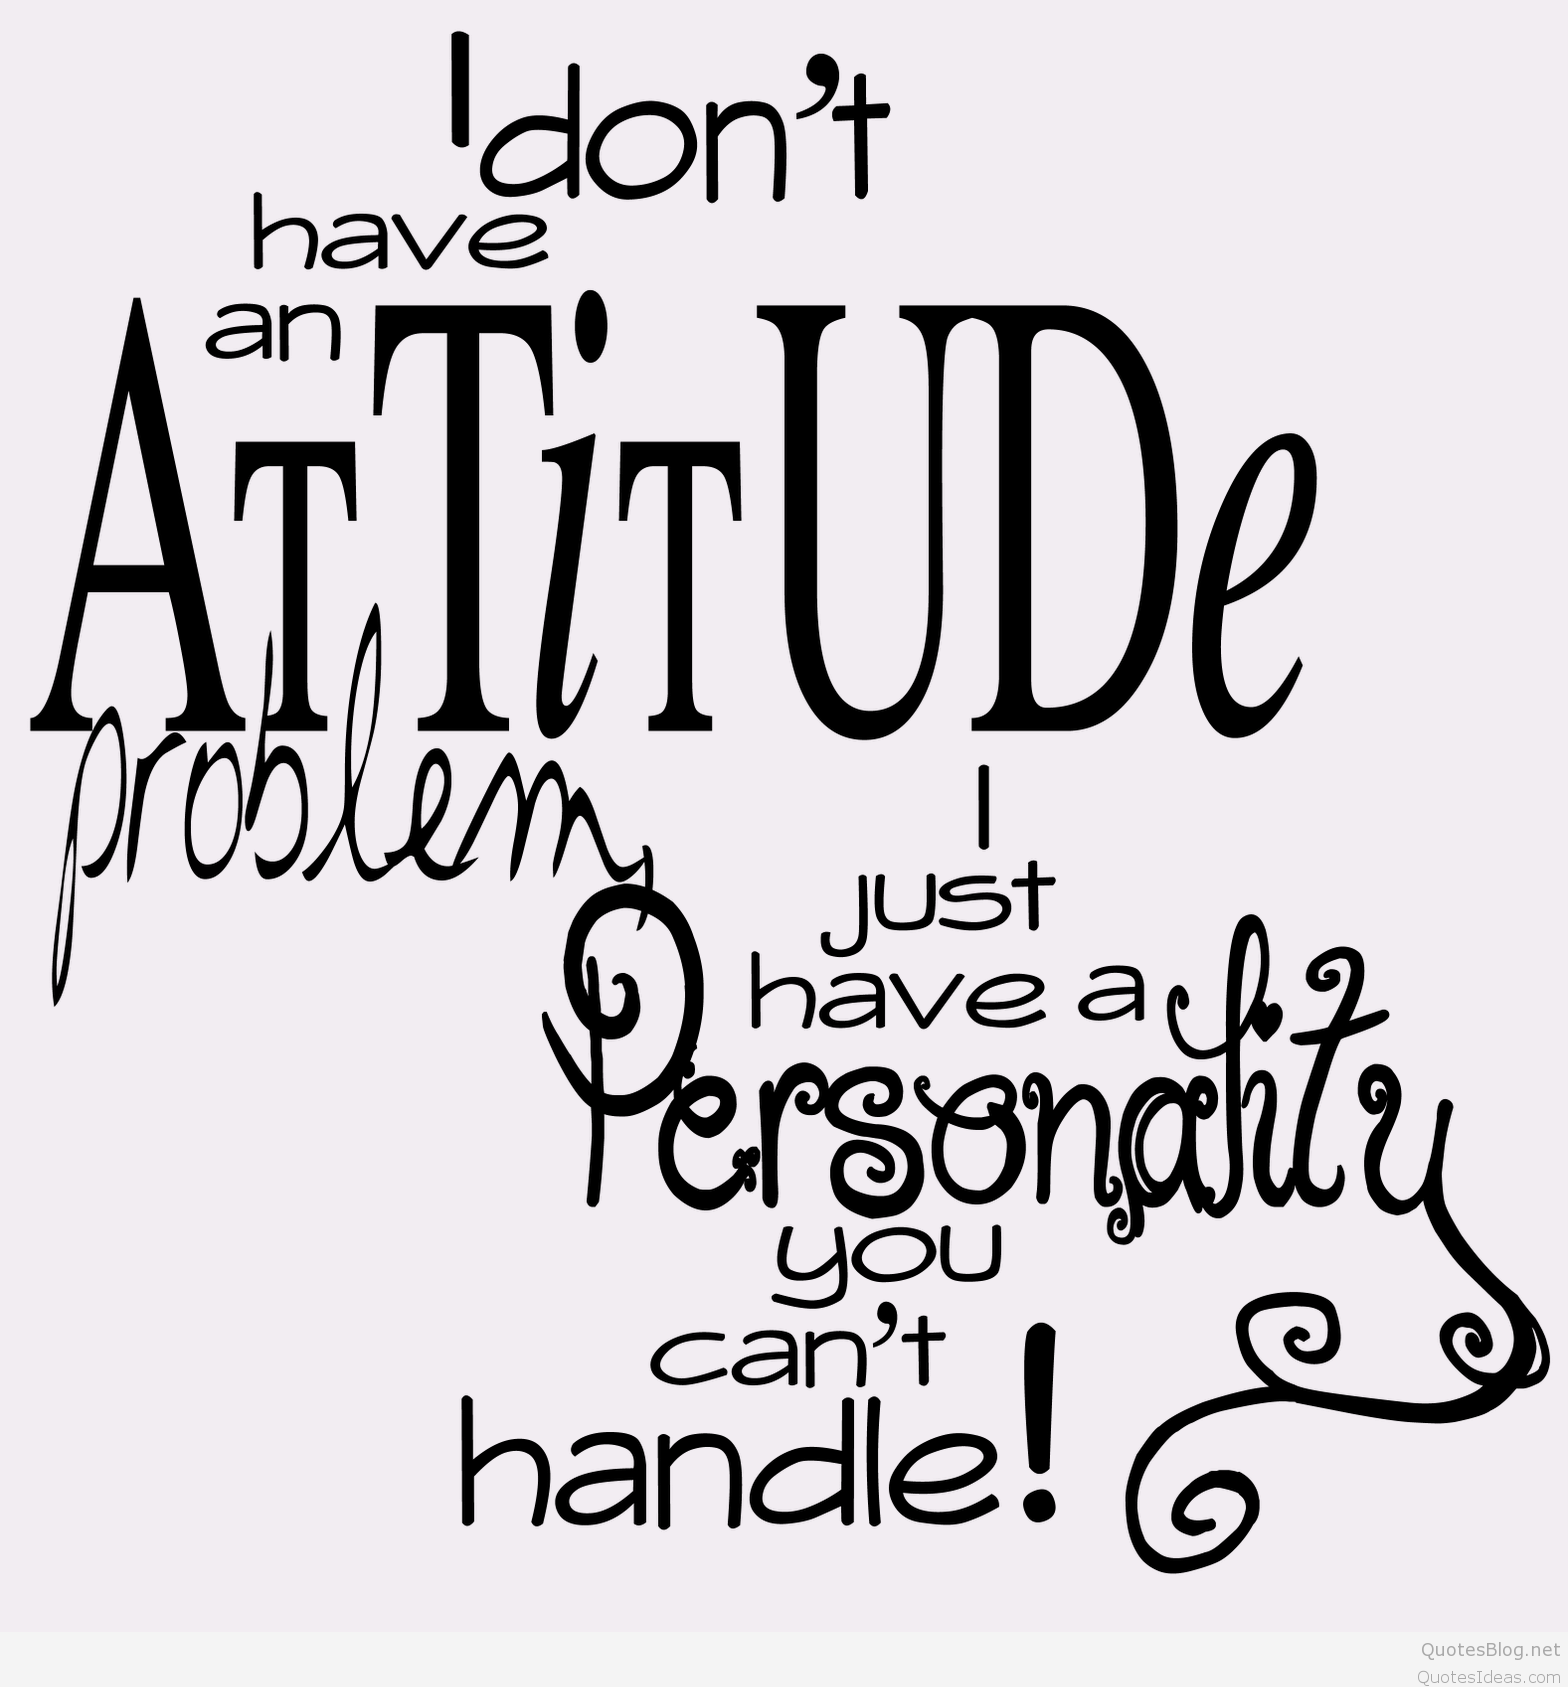 Attitude quote with wallpaper hd